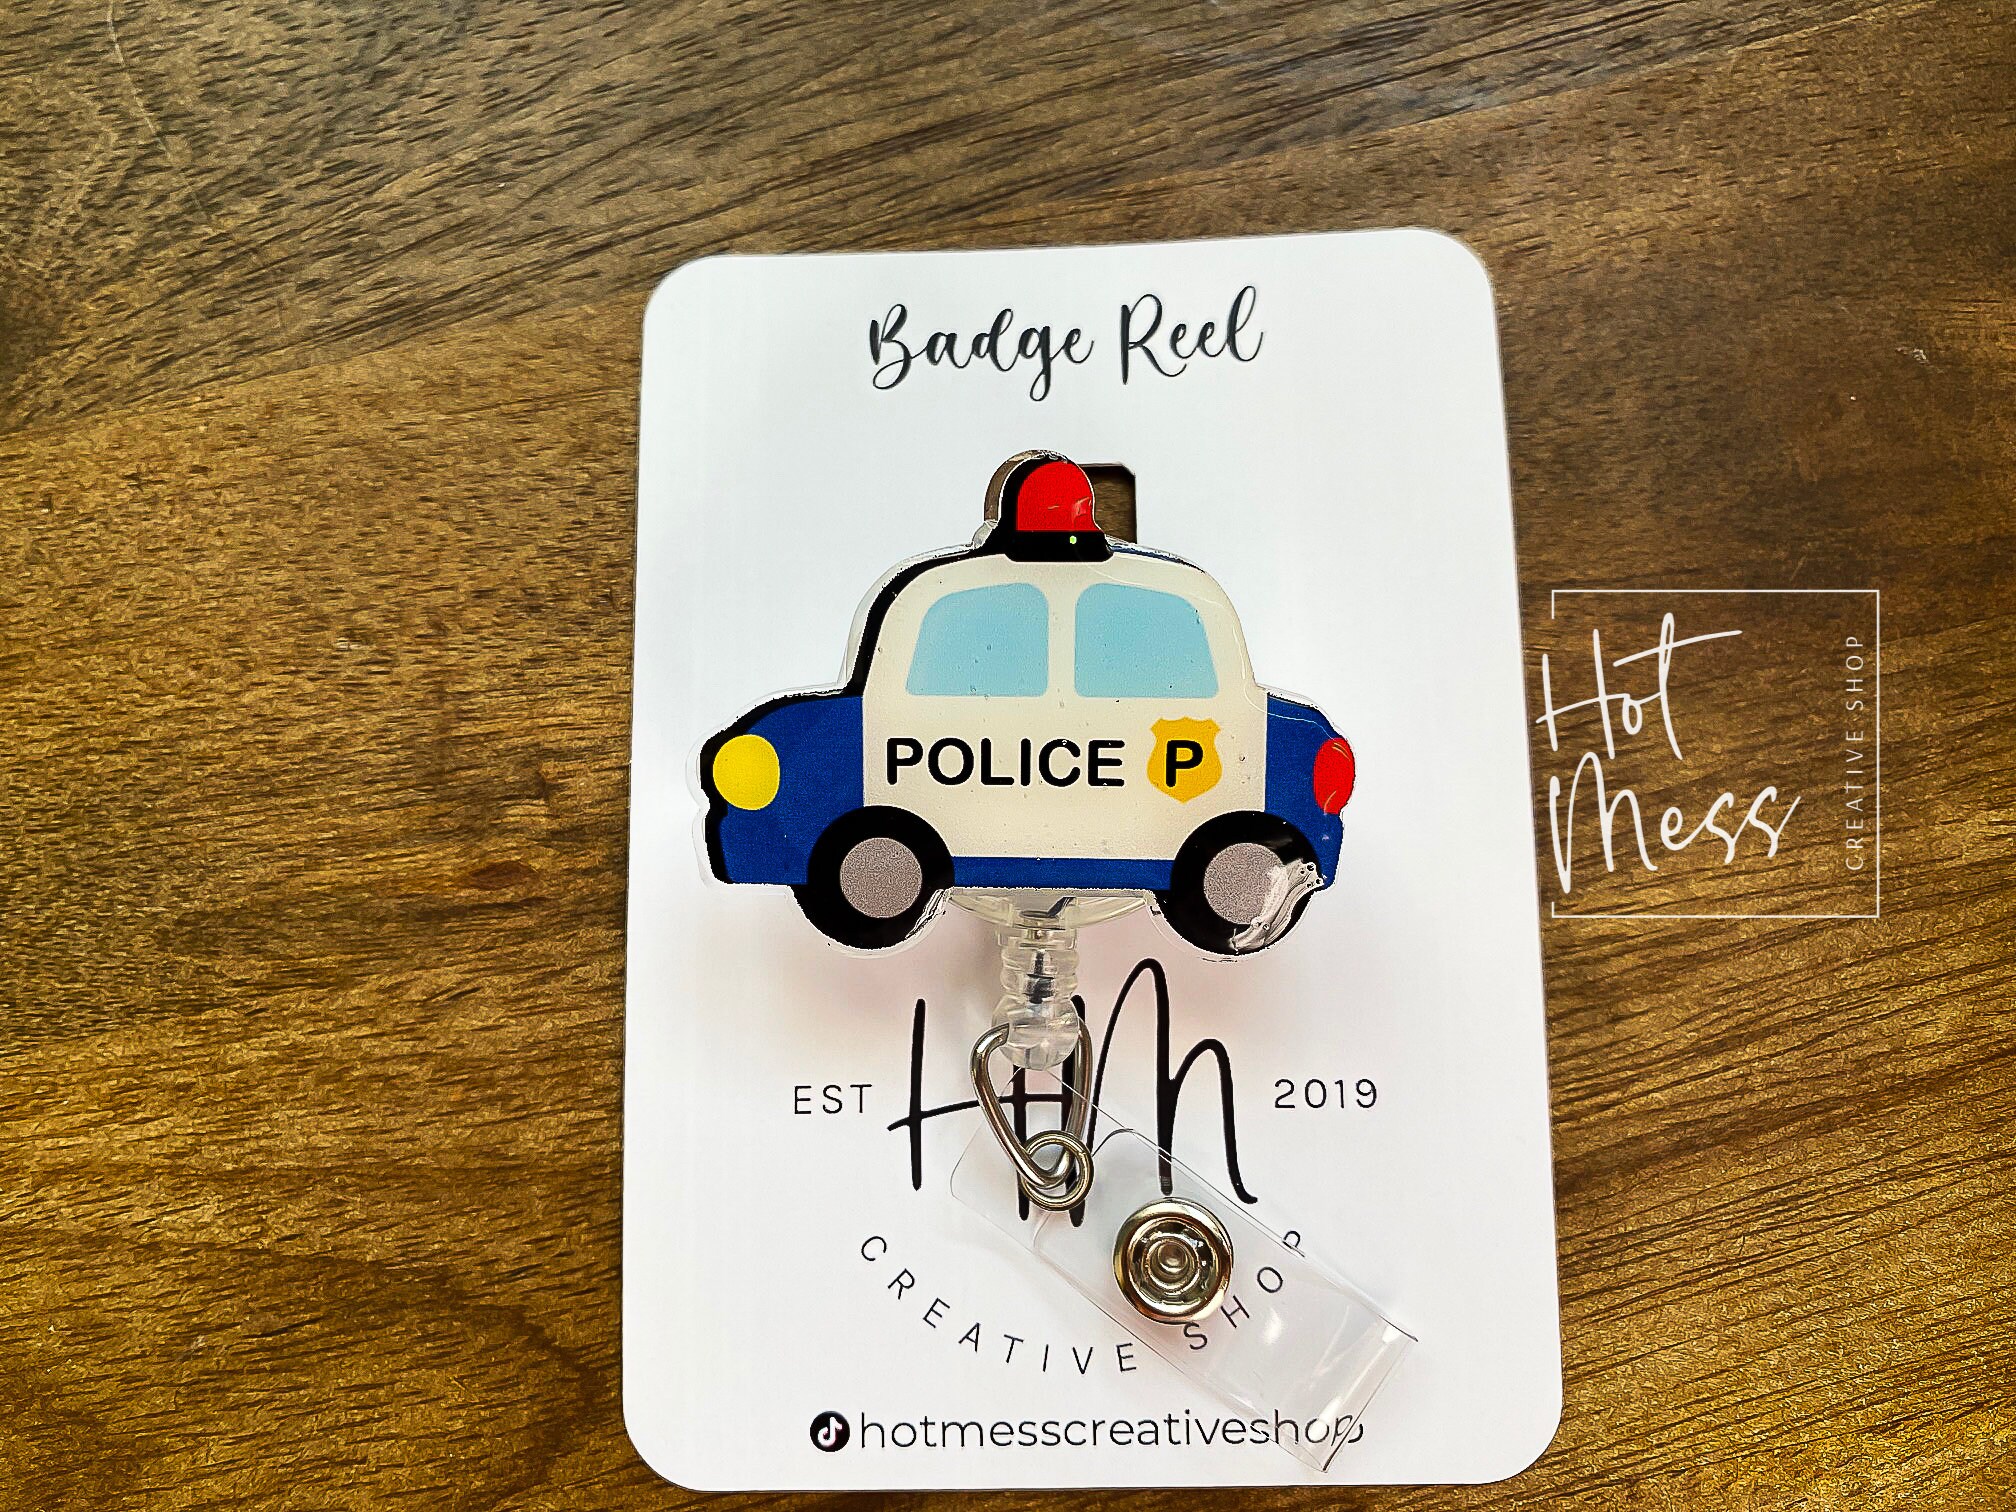 Police Car Badge Reel, Police Support Badge, Police ID Holder